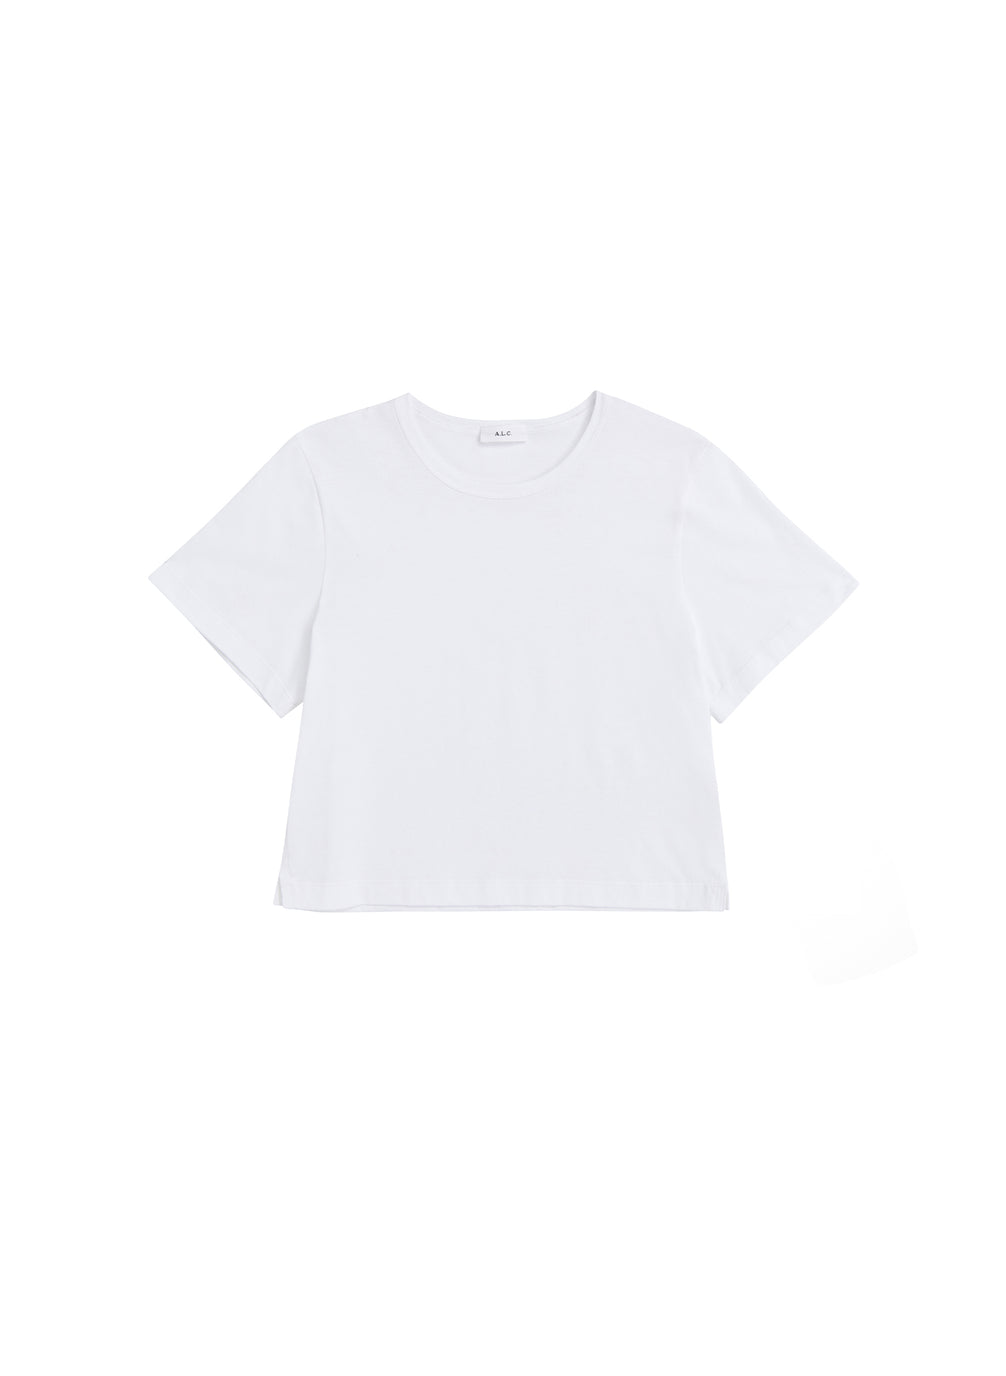 flatlay of white tshirt